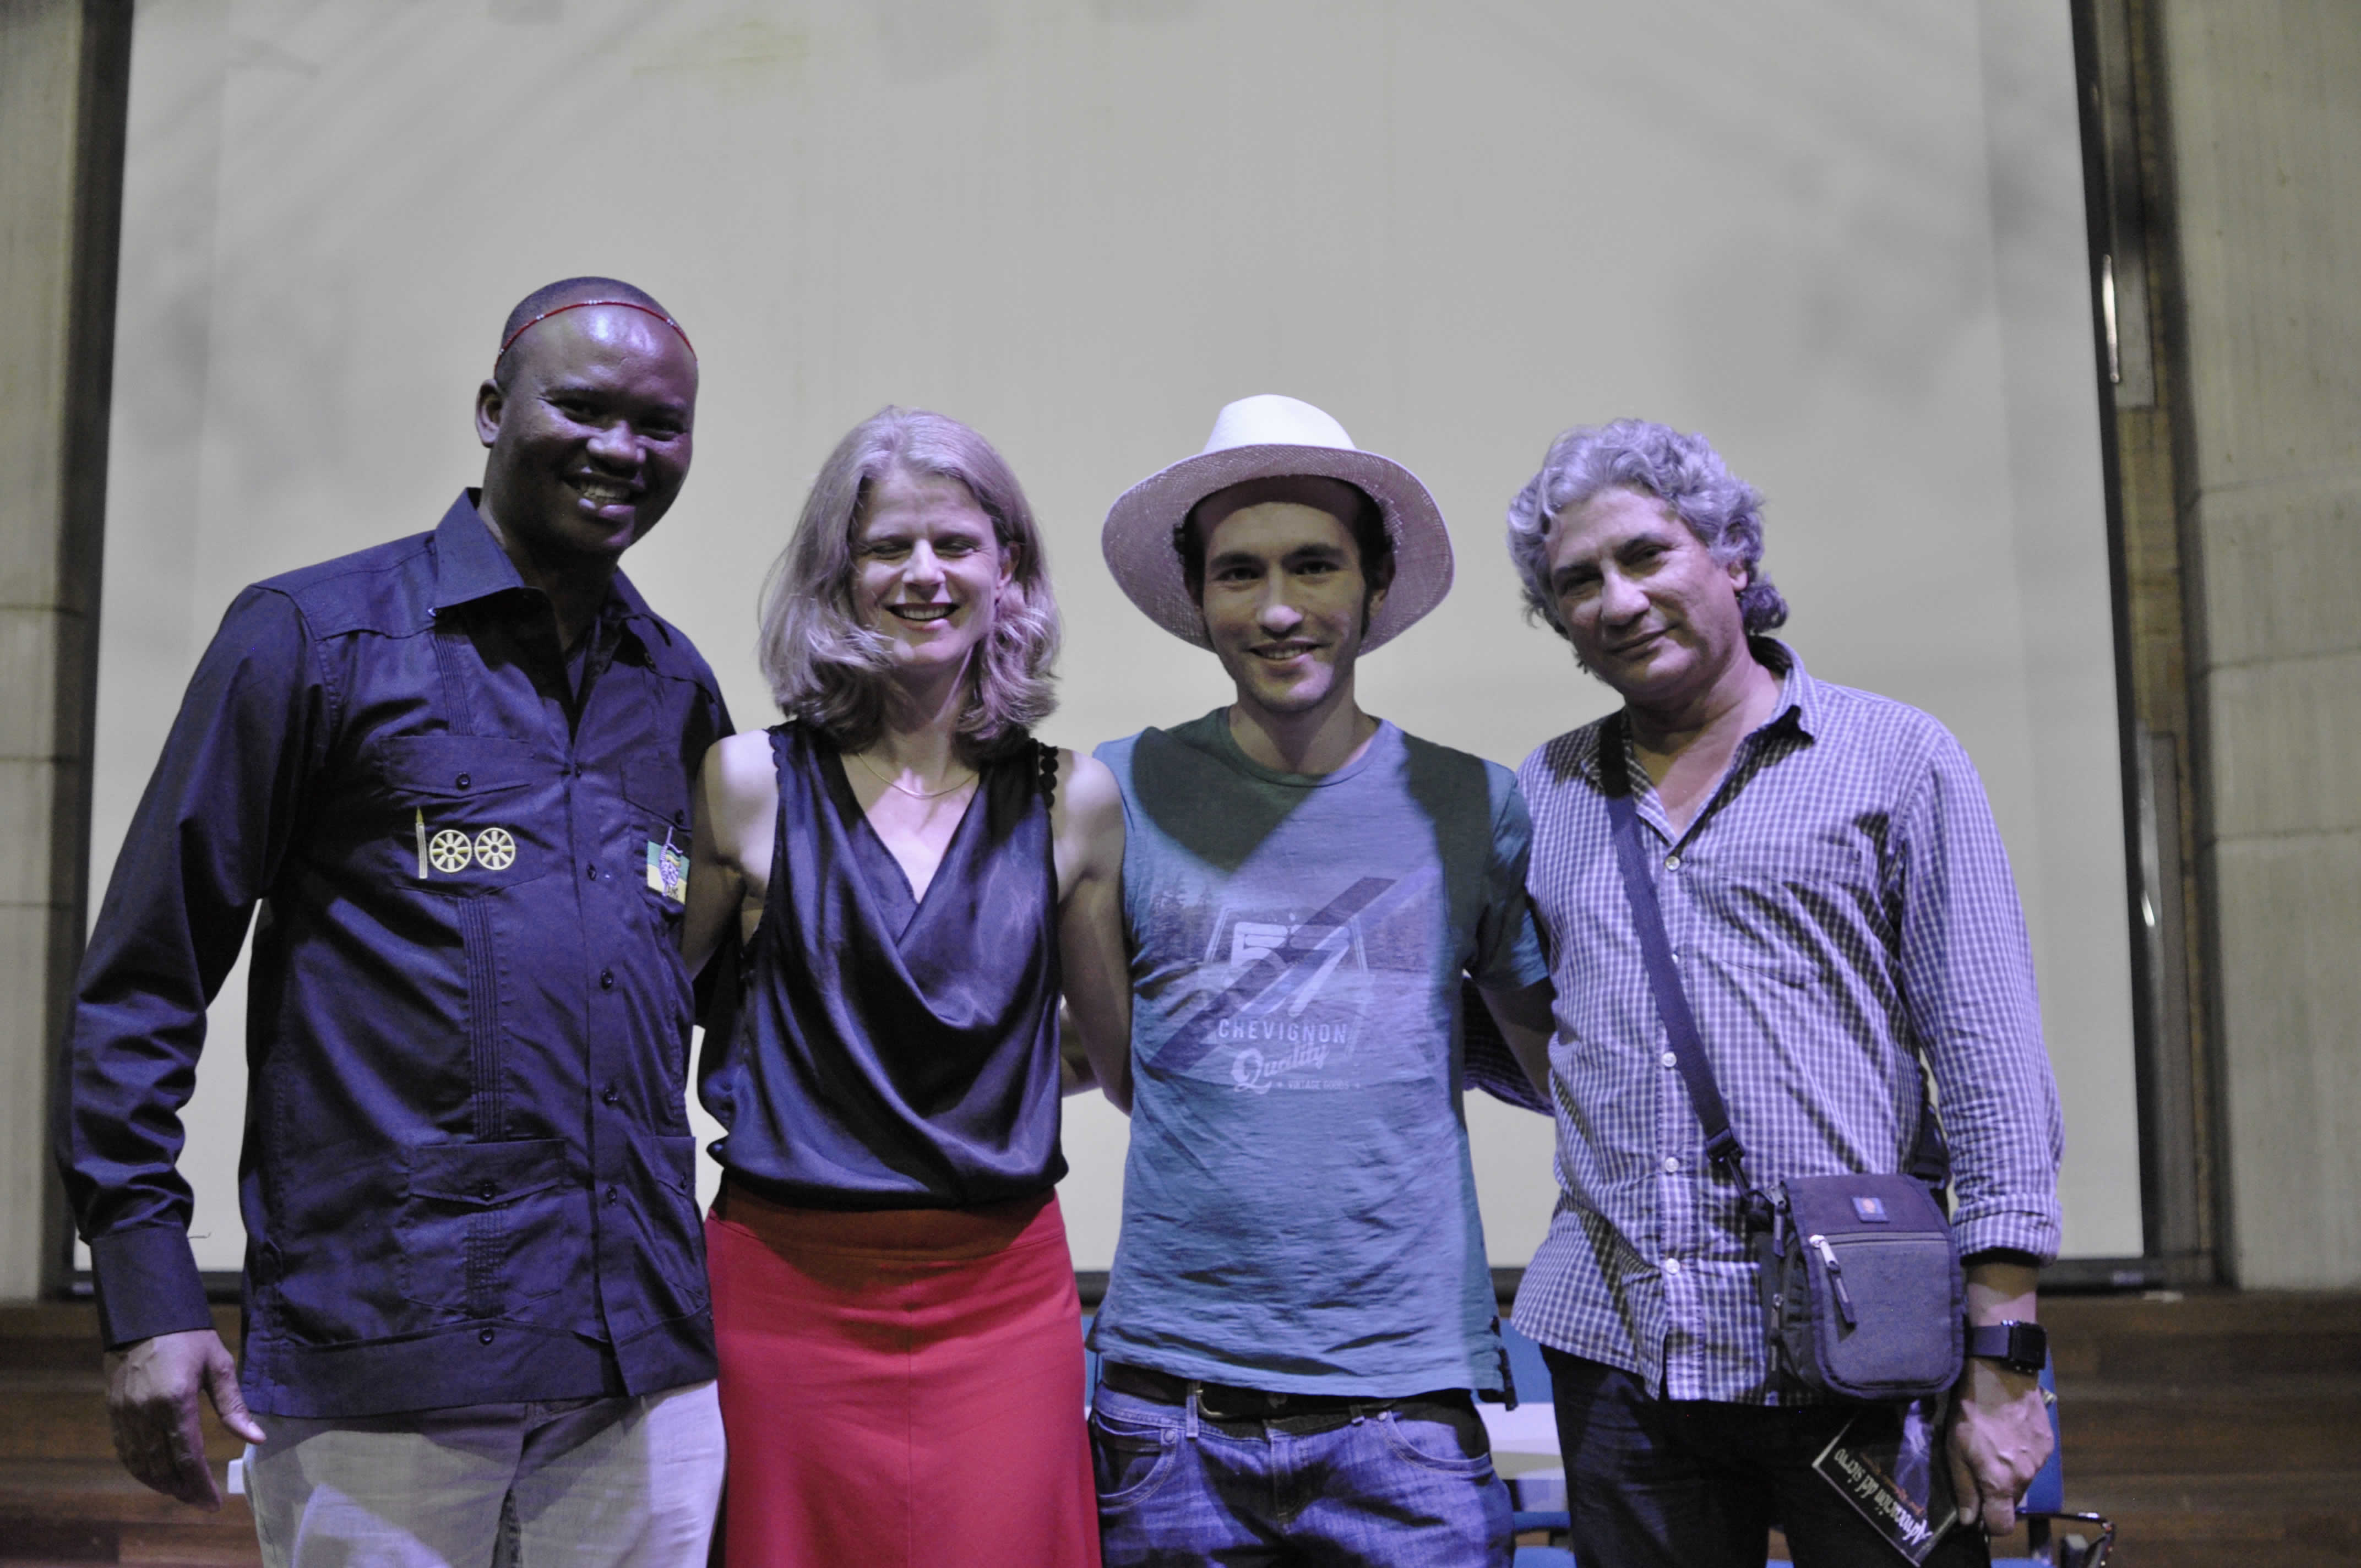 De izquierda a derecha: Zolani Mkiva (Suráfrica), Sasja Janssen (Países Bajos), Juan Felipe López (Colombia), José Rolando Rivero (Cuba)